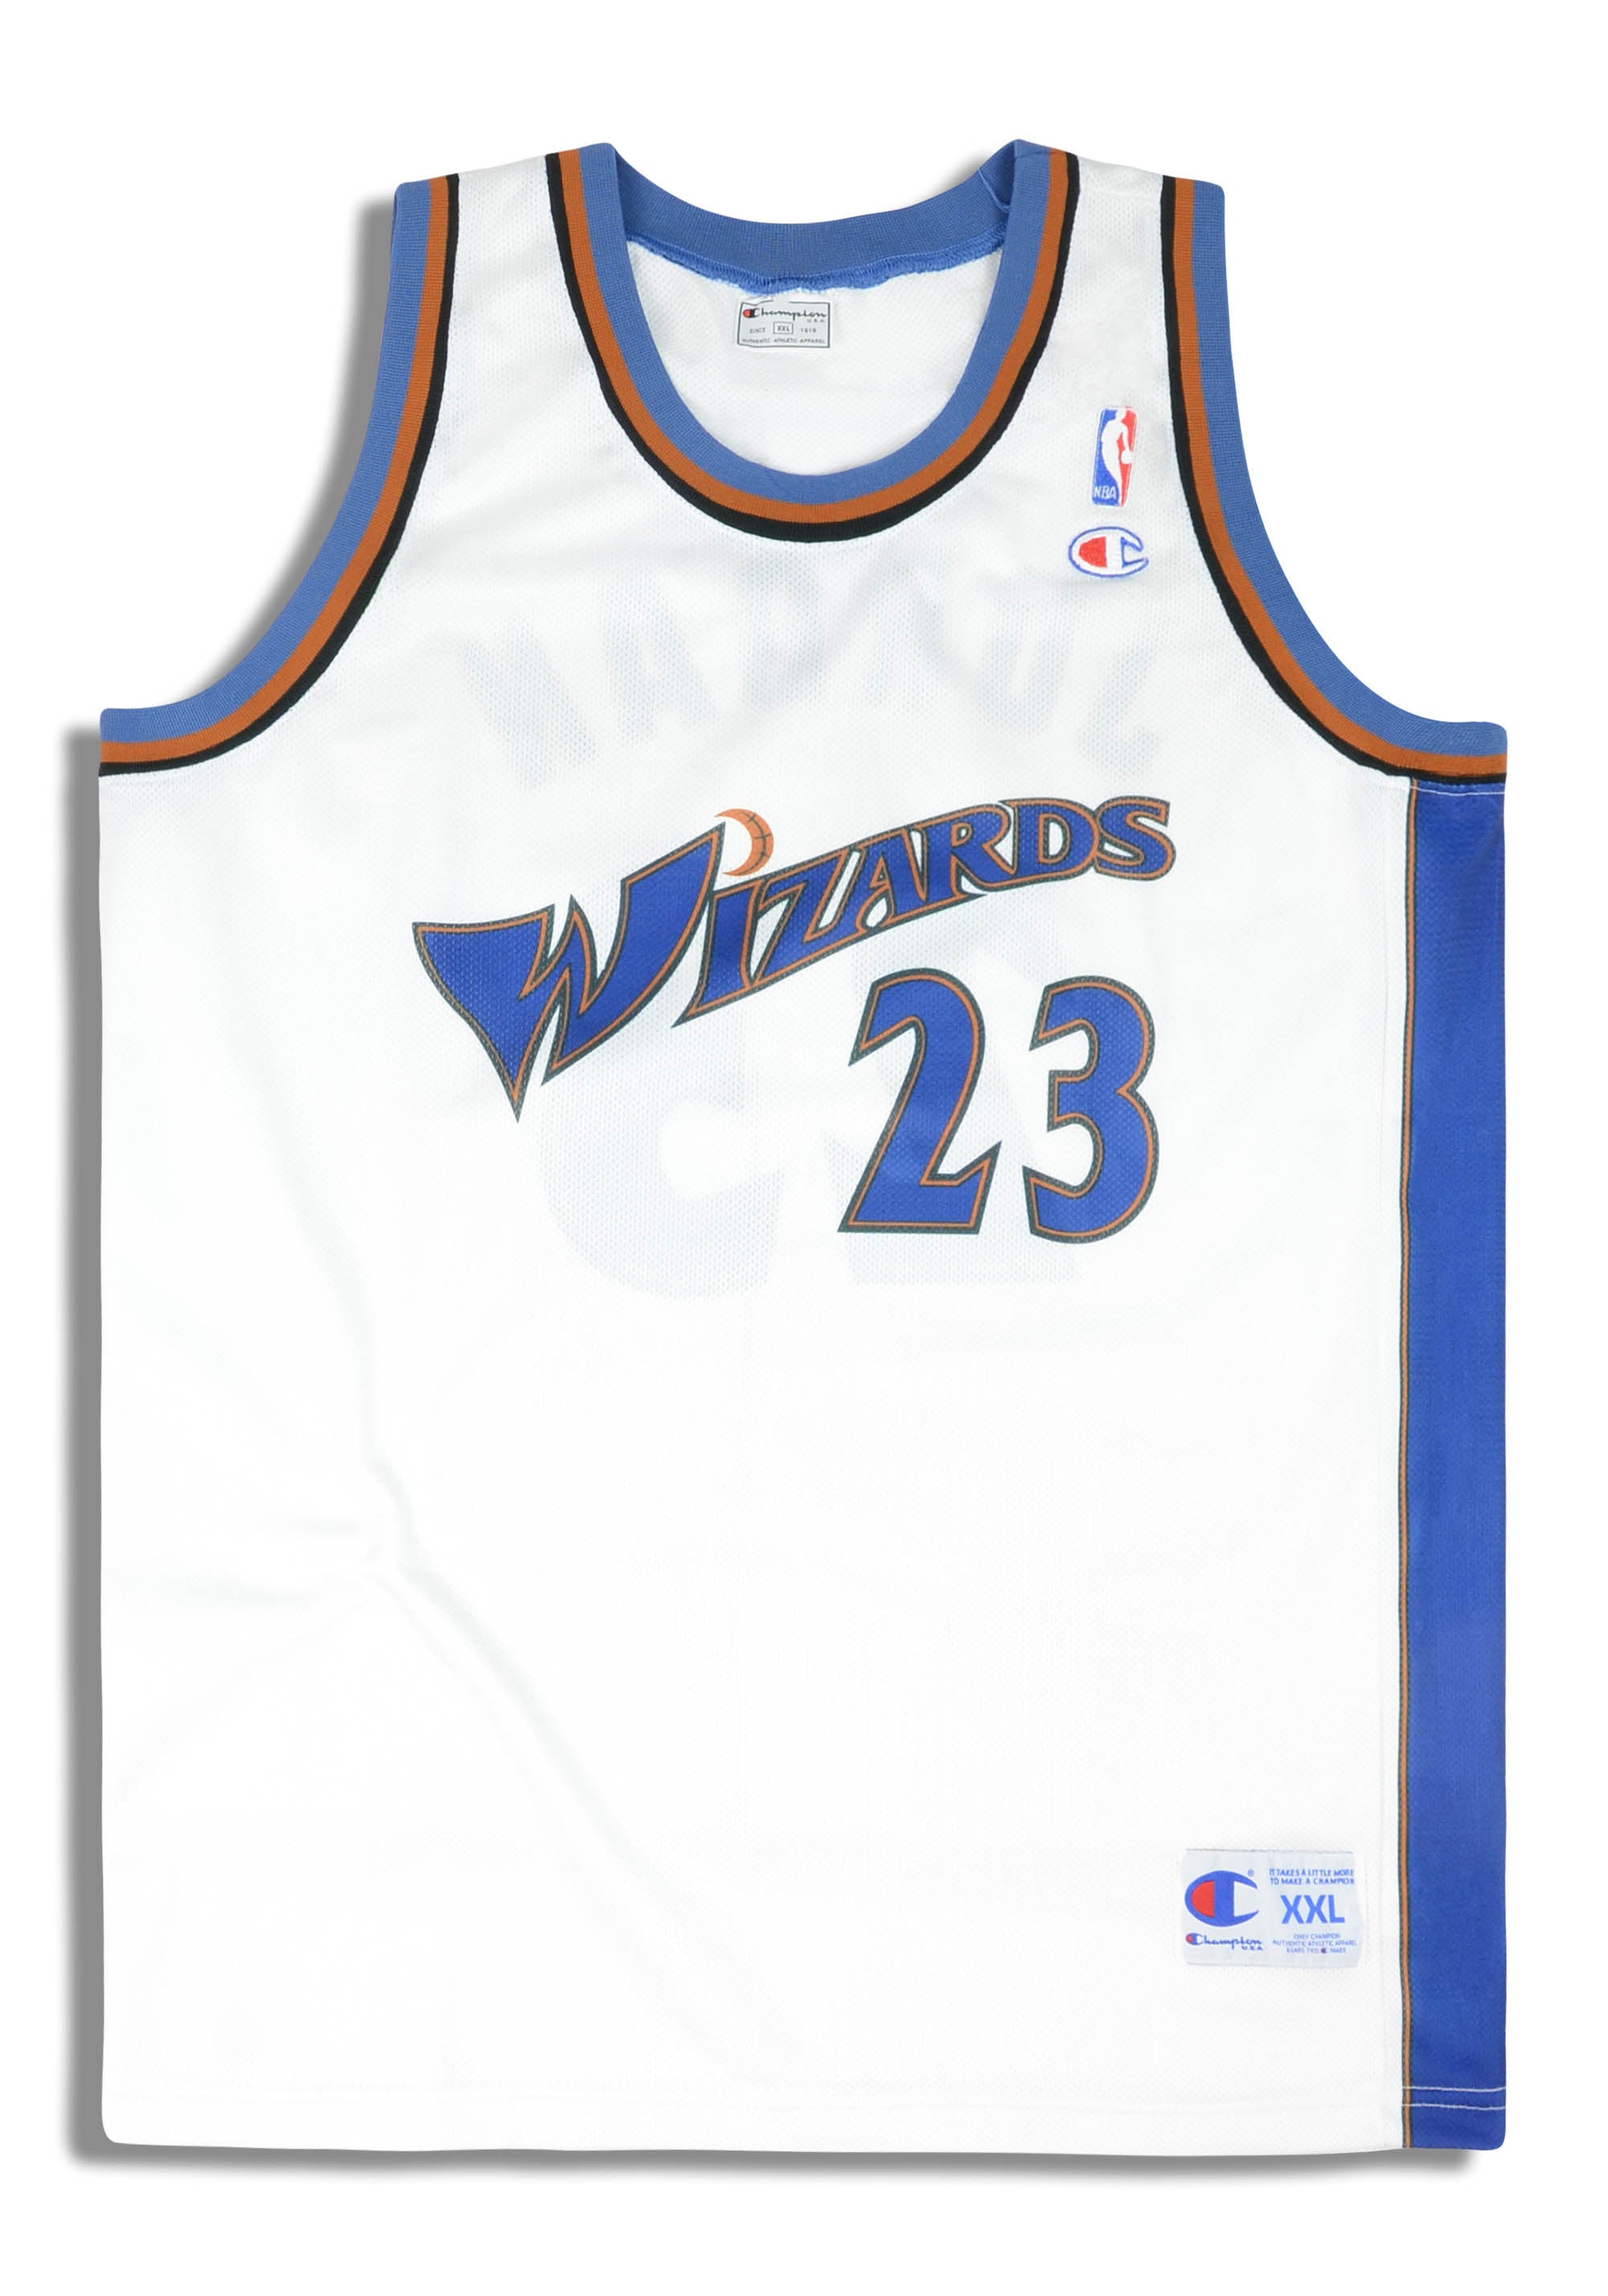 Washington Wizards Alternate Uniform (2007) - 'Wizards' on white